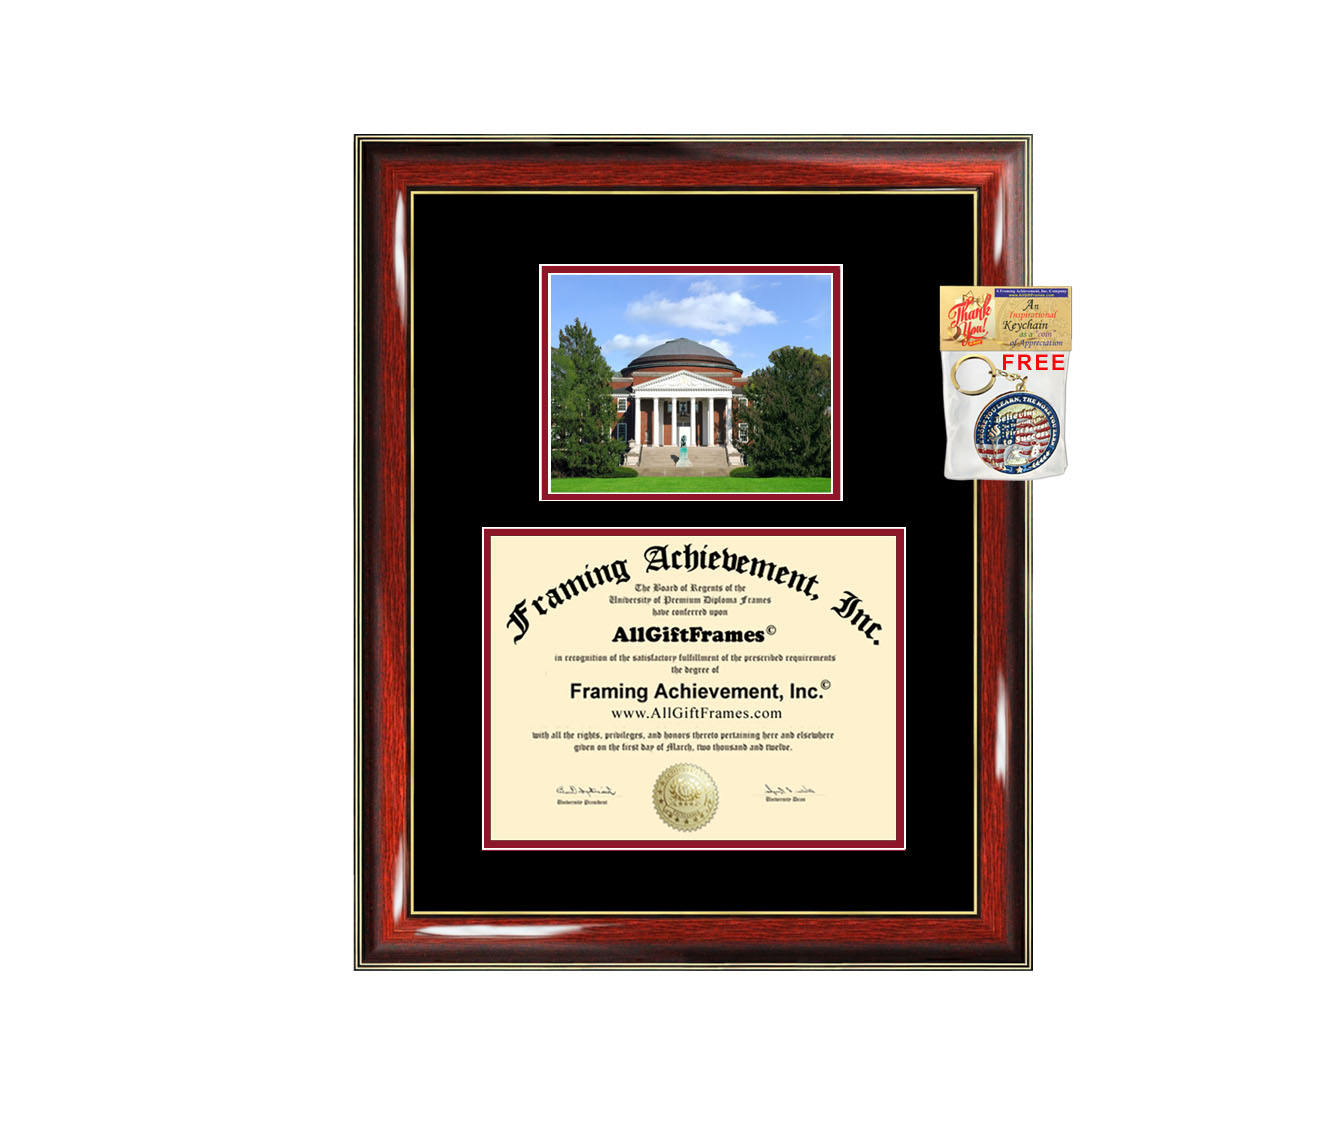 University of Louisville diploma frame campus photo certificate framin